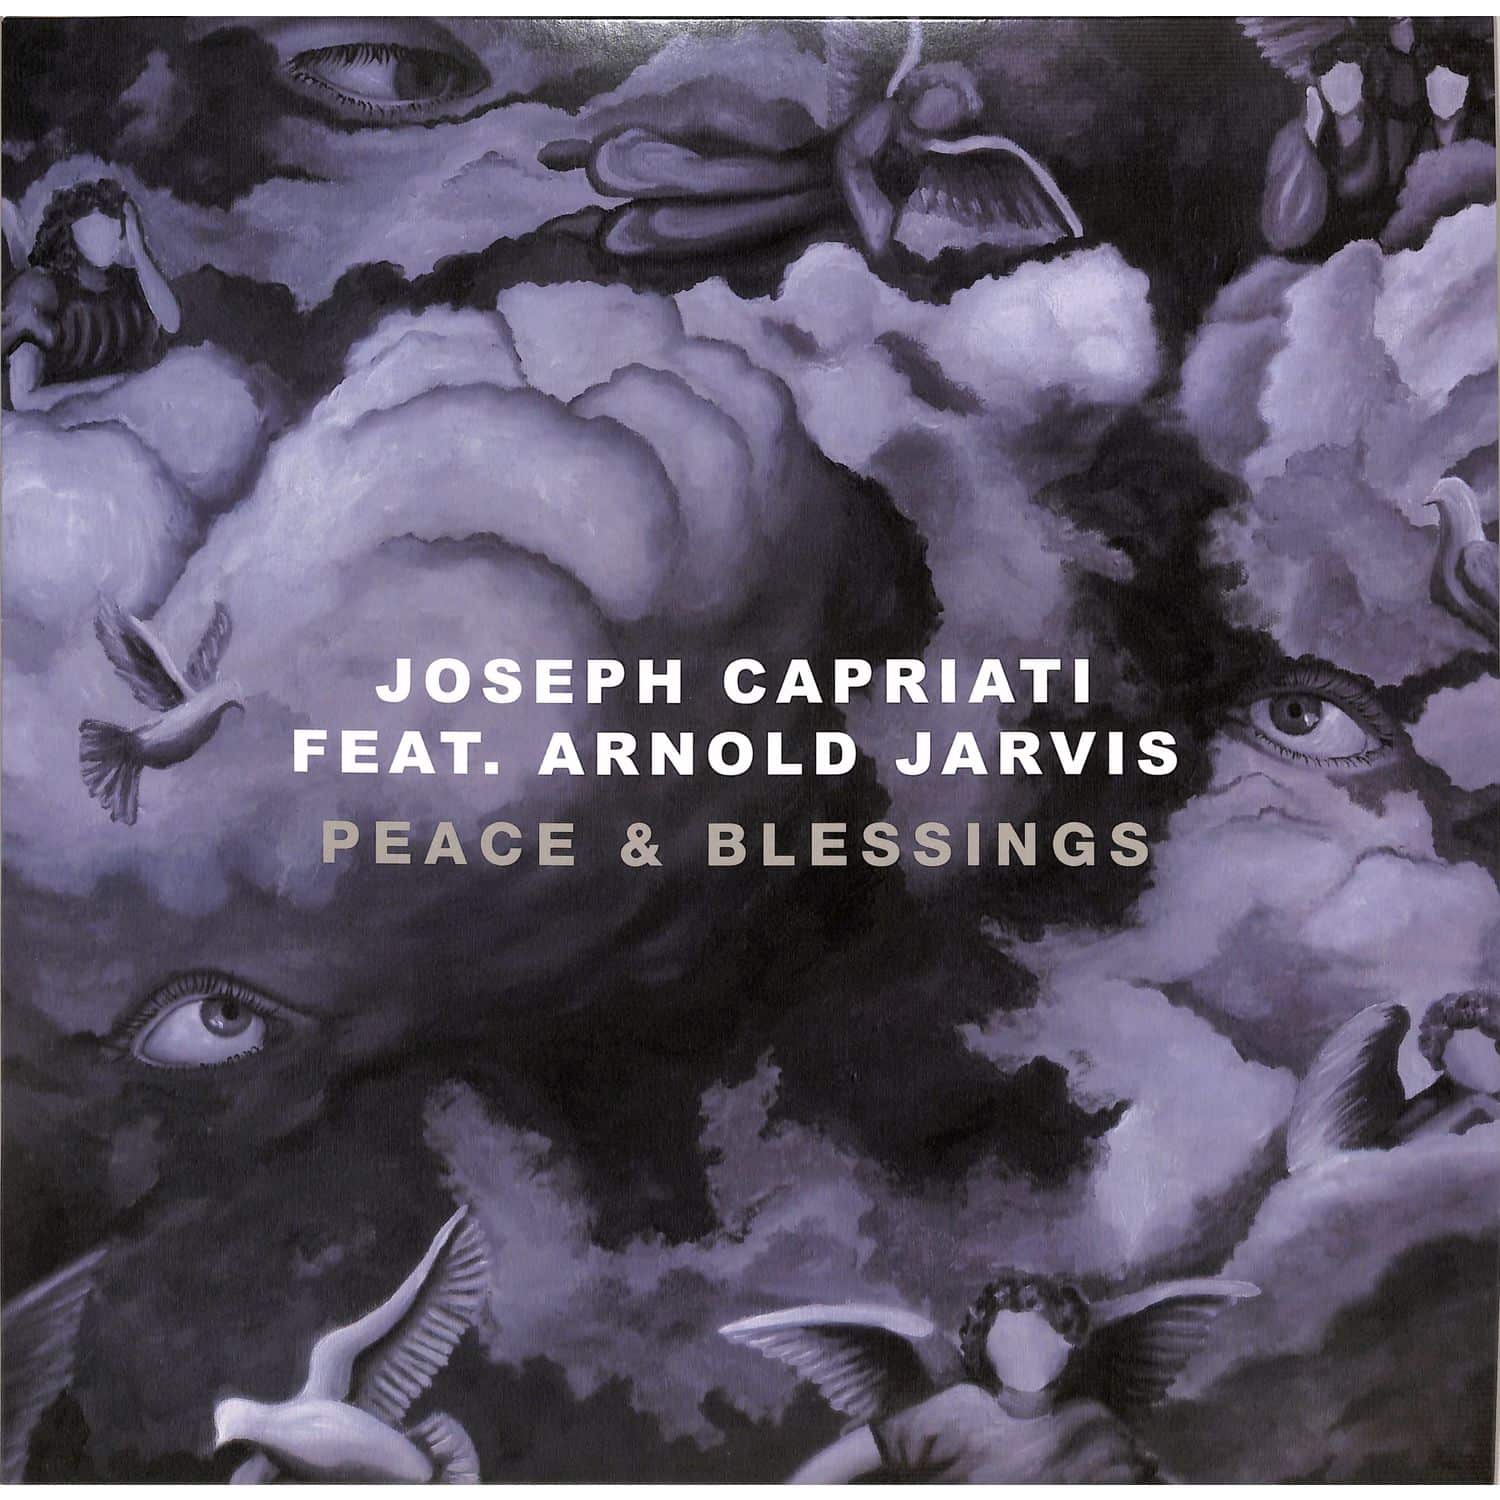 Joseph Capriati Ft Arnold Jarvis - PEACE & BLESSINGS